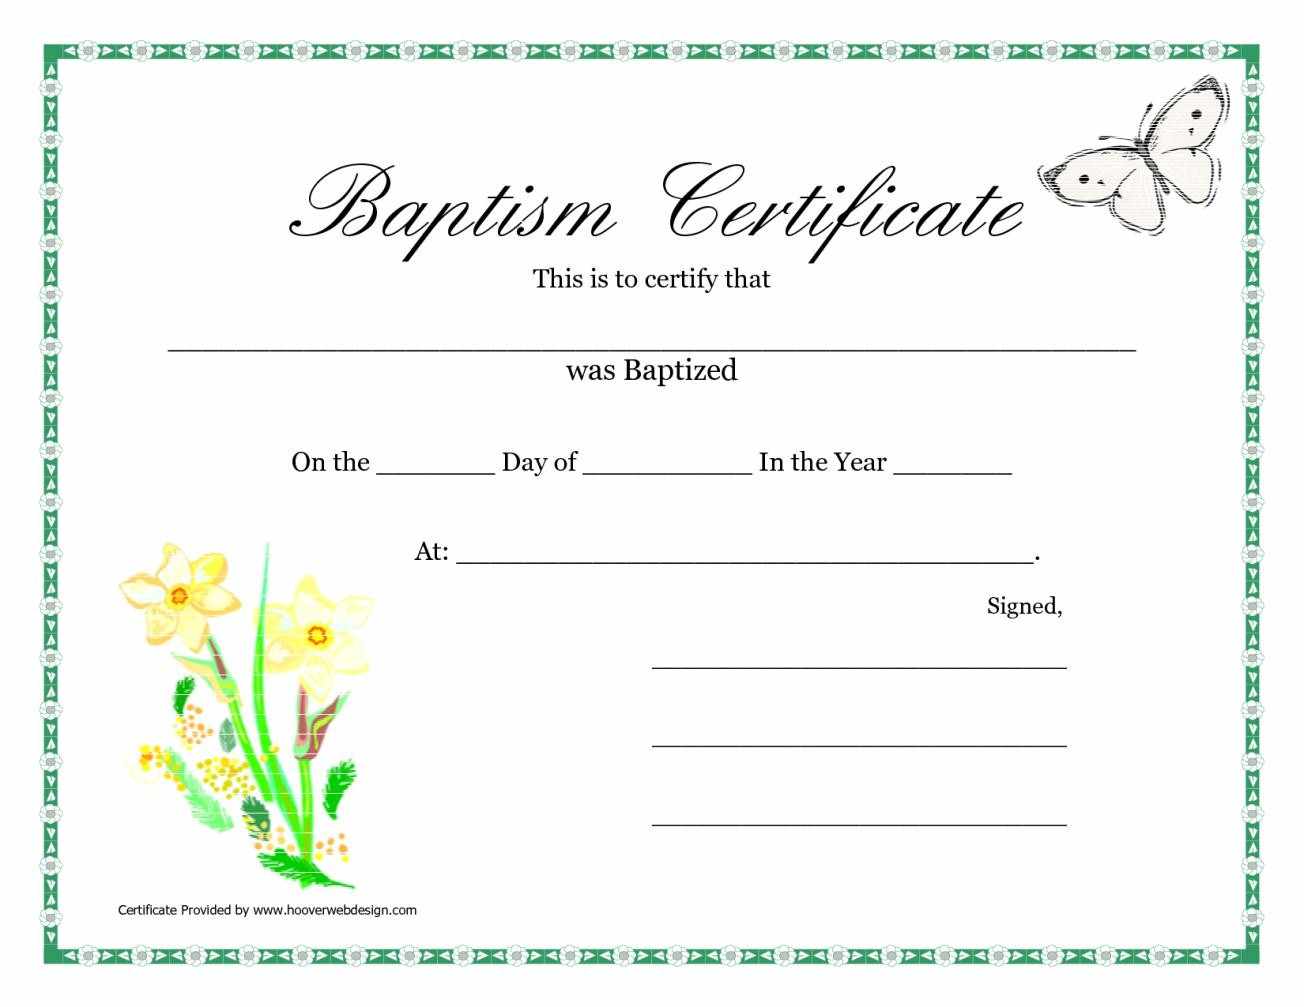 printable-certificate-of-baptism